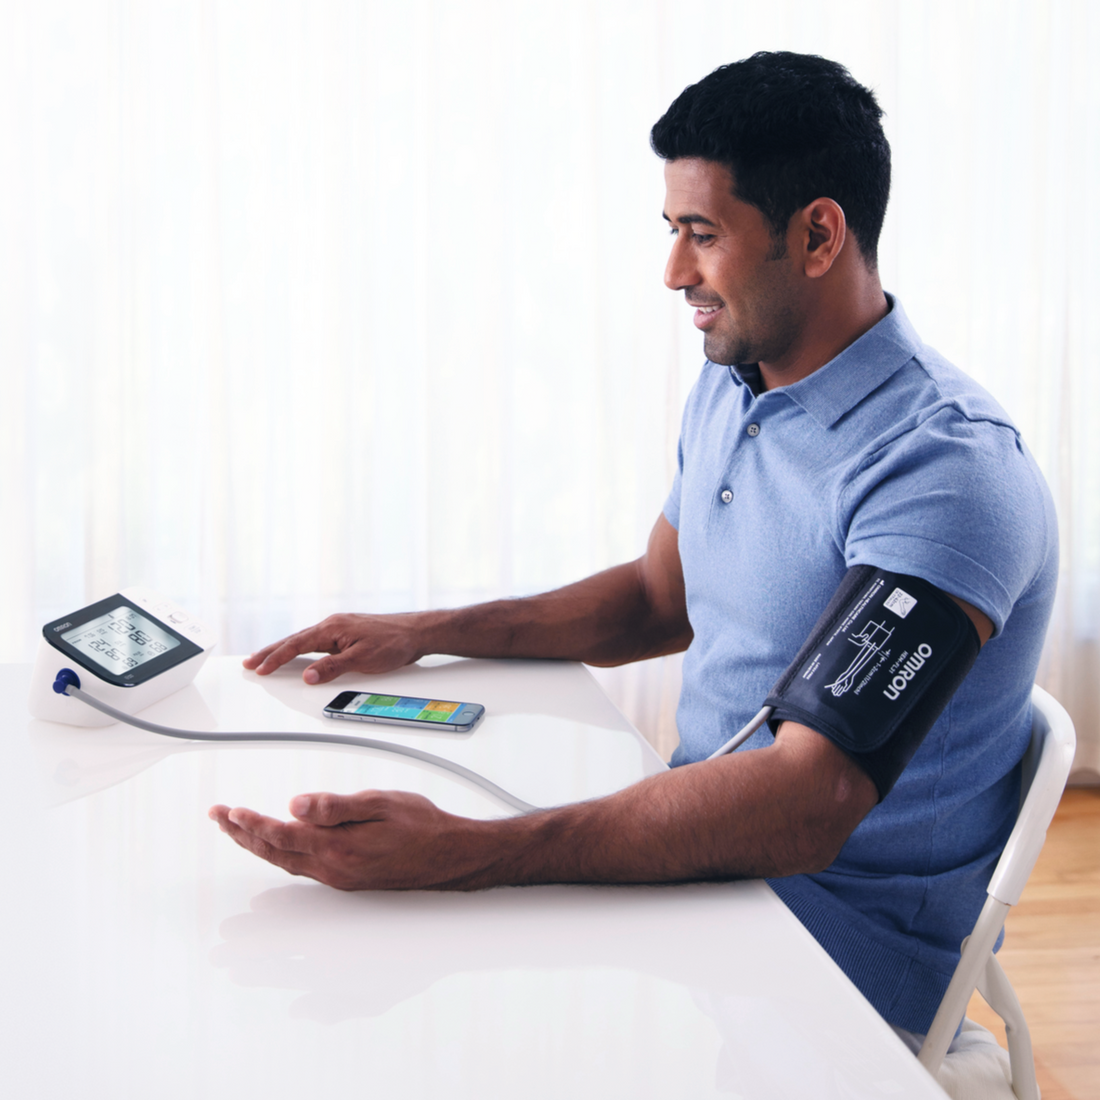 Are Omron Blood Pressure Monitors Accurate?